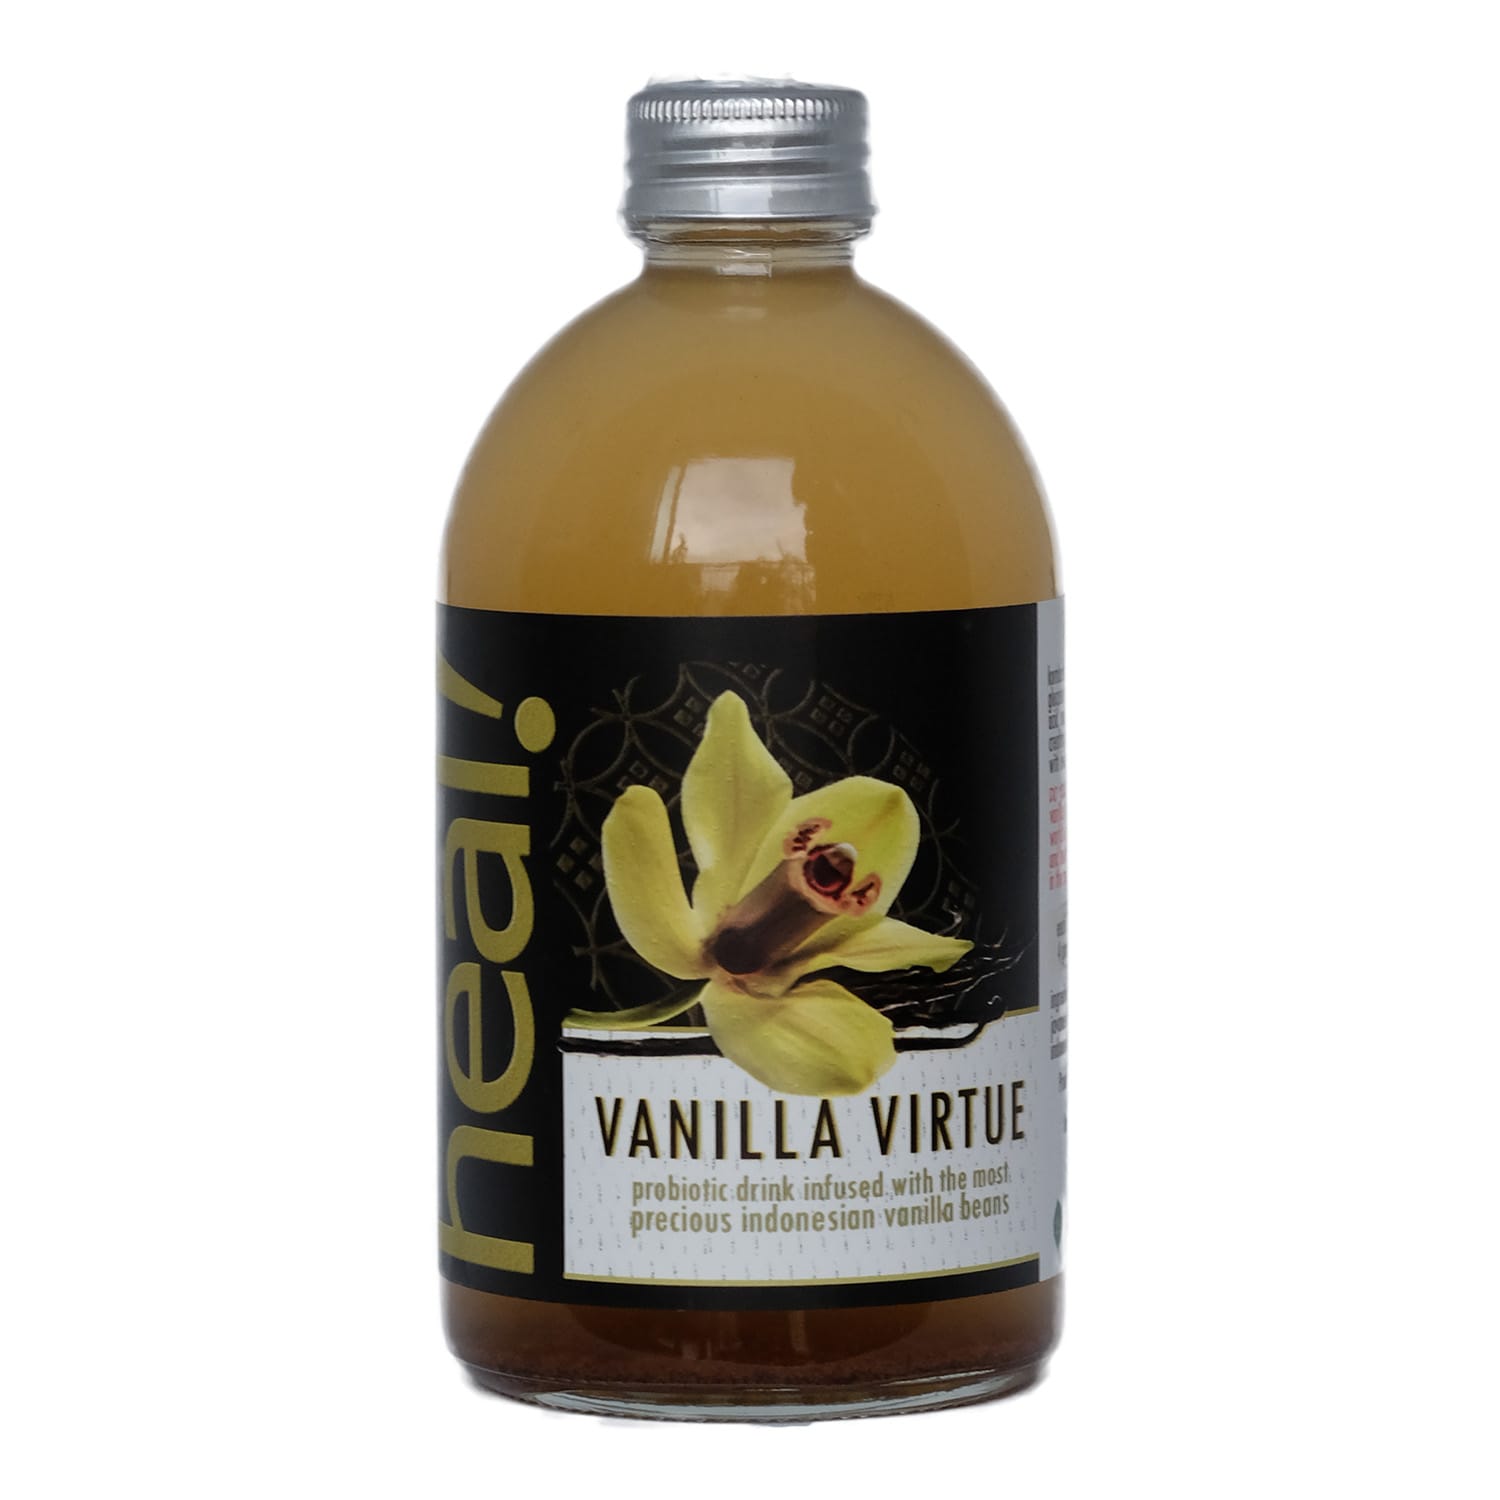 Vanilla Virtue Kombucha by Heal! Probiotics